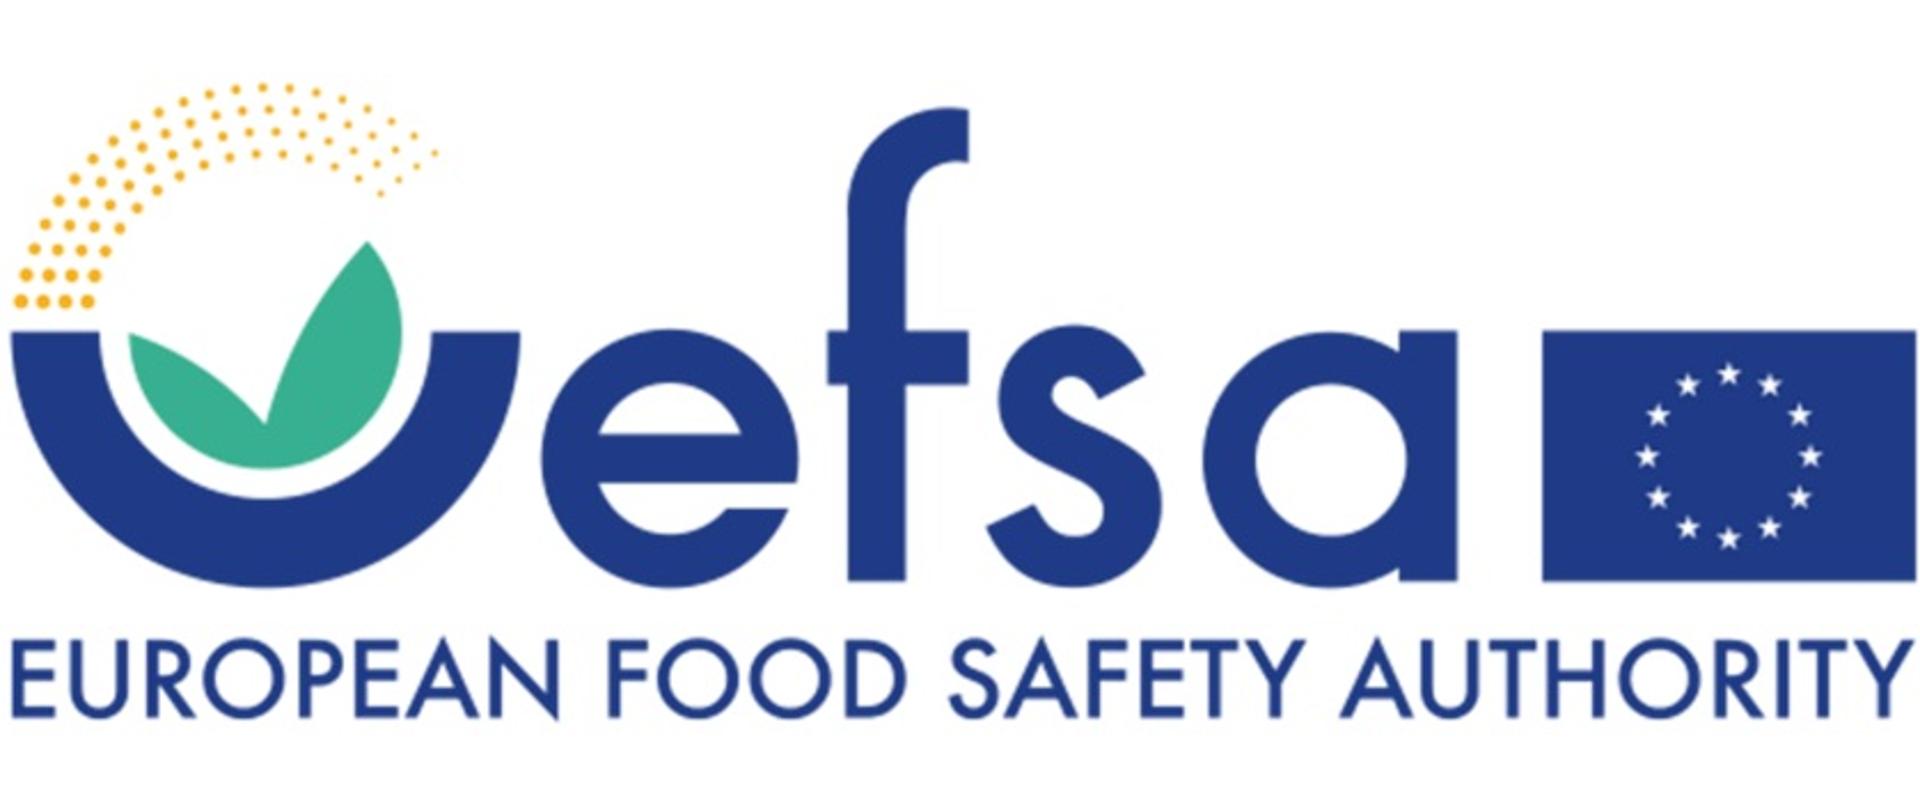 European Food Safety Authority